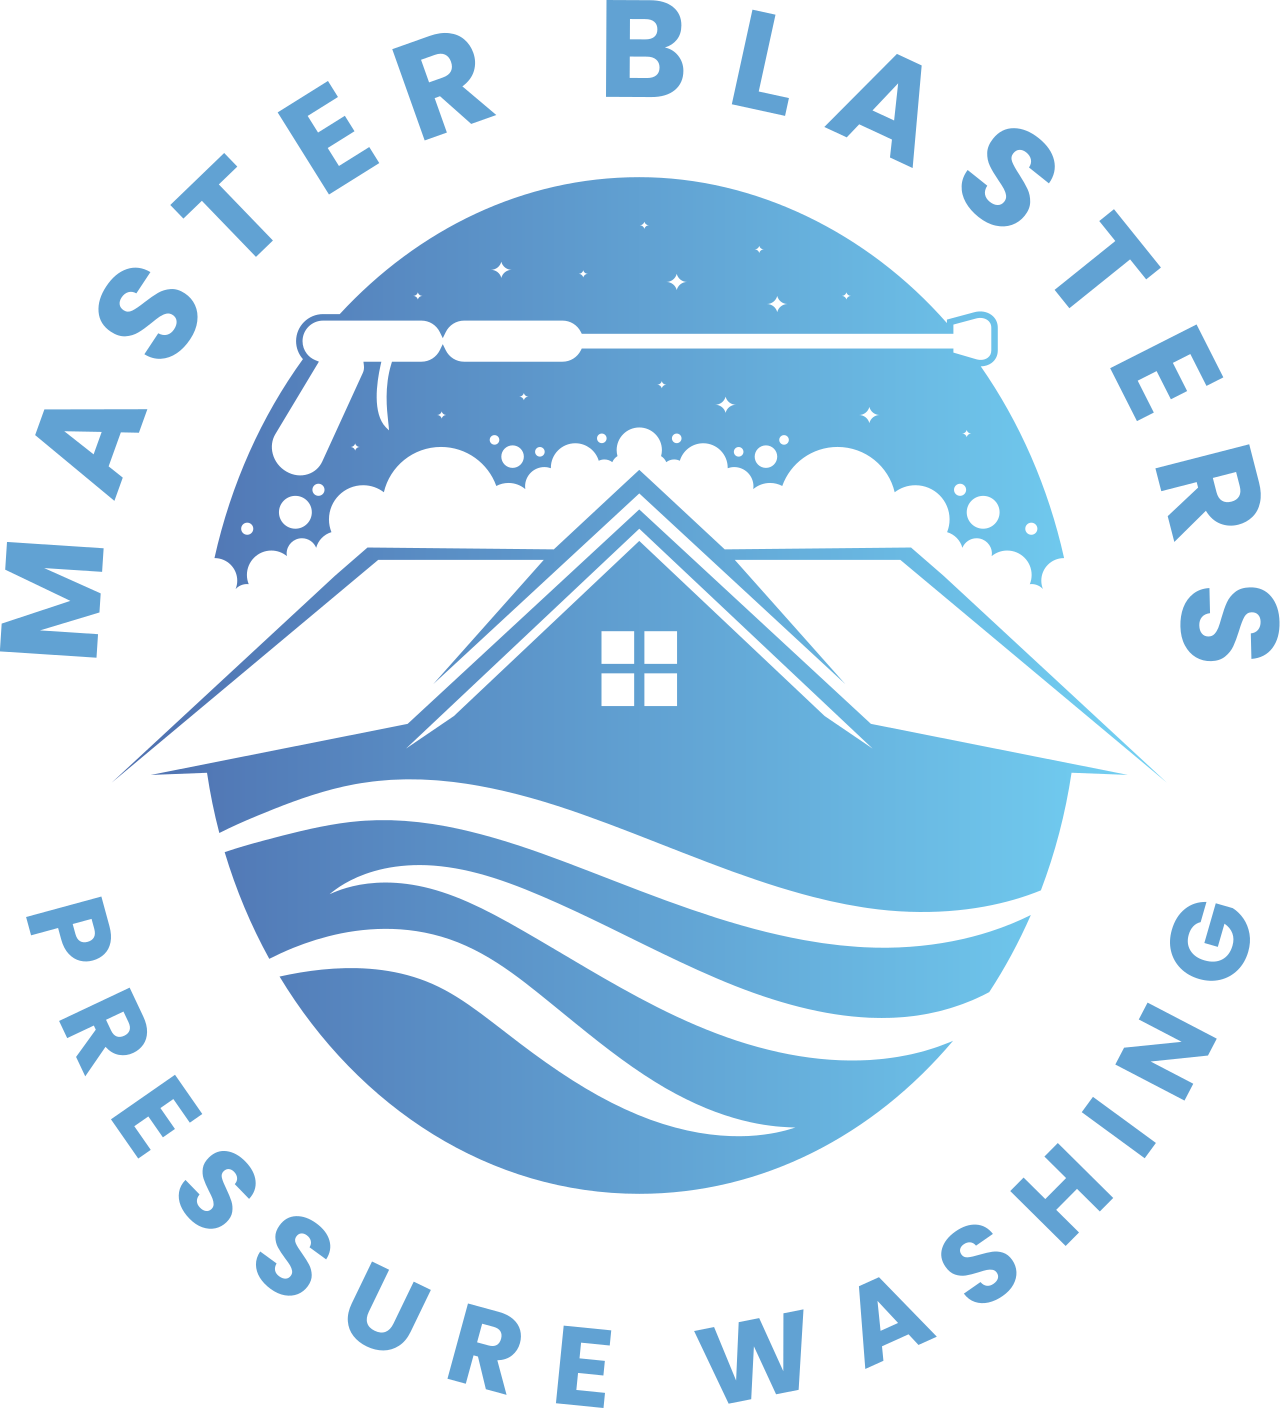 Master Blasters's logo